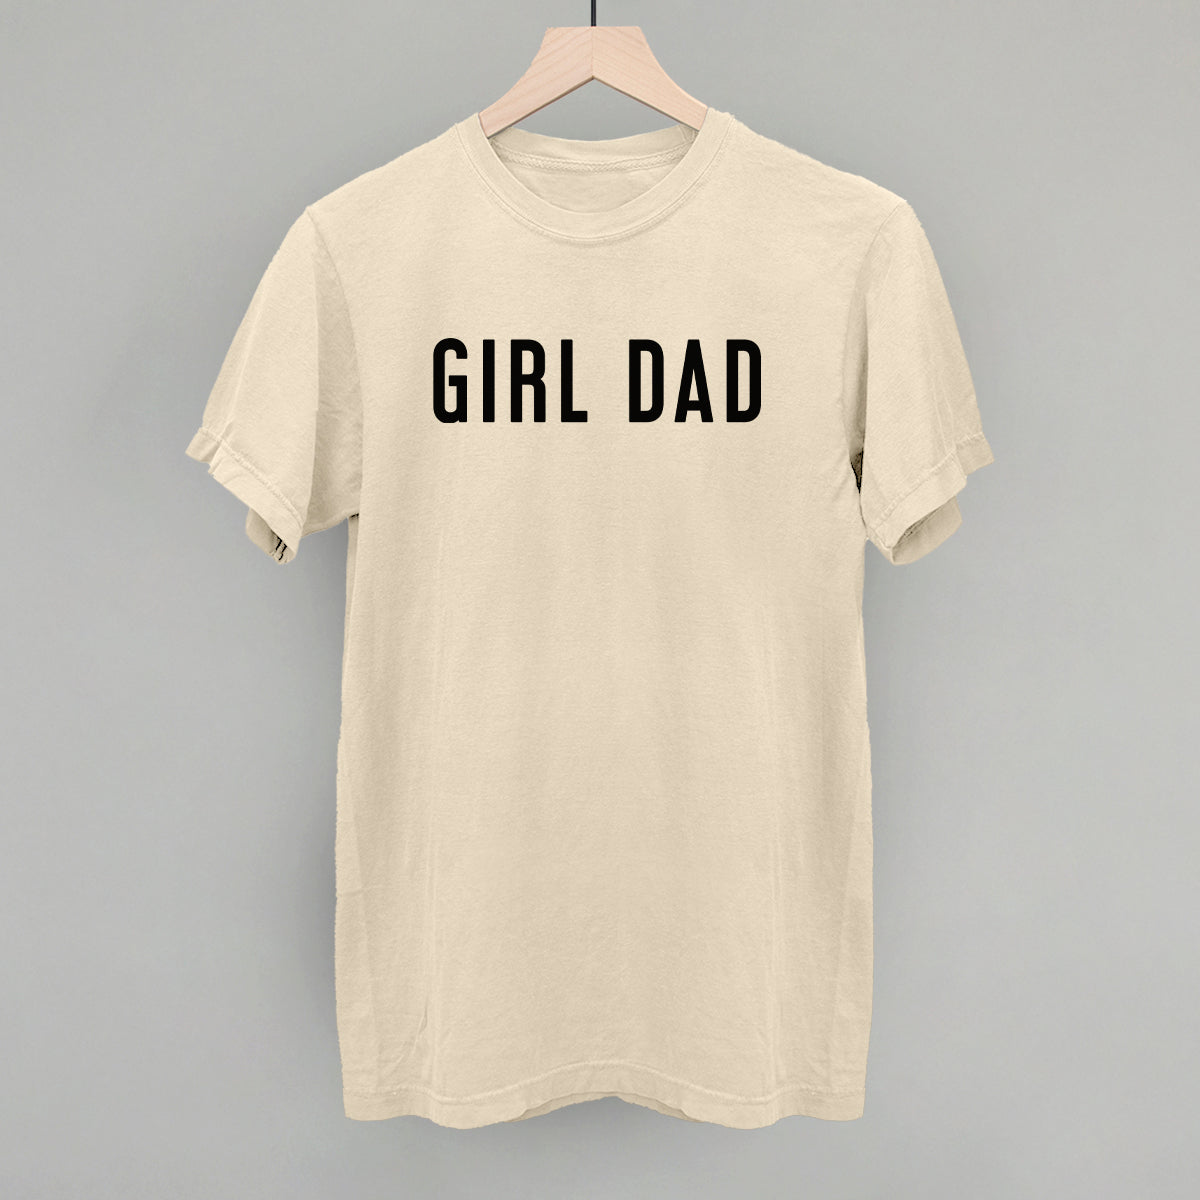 girl dad shirts